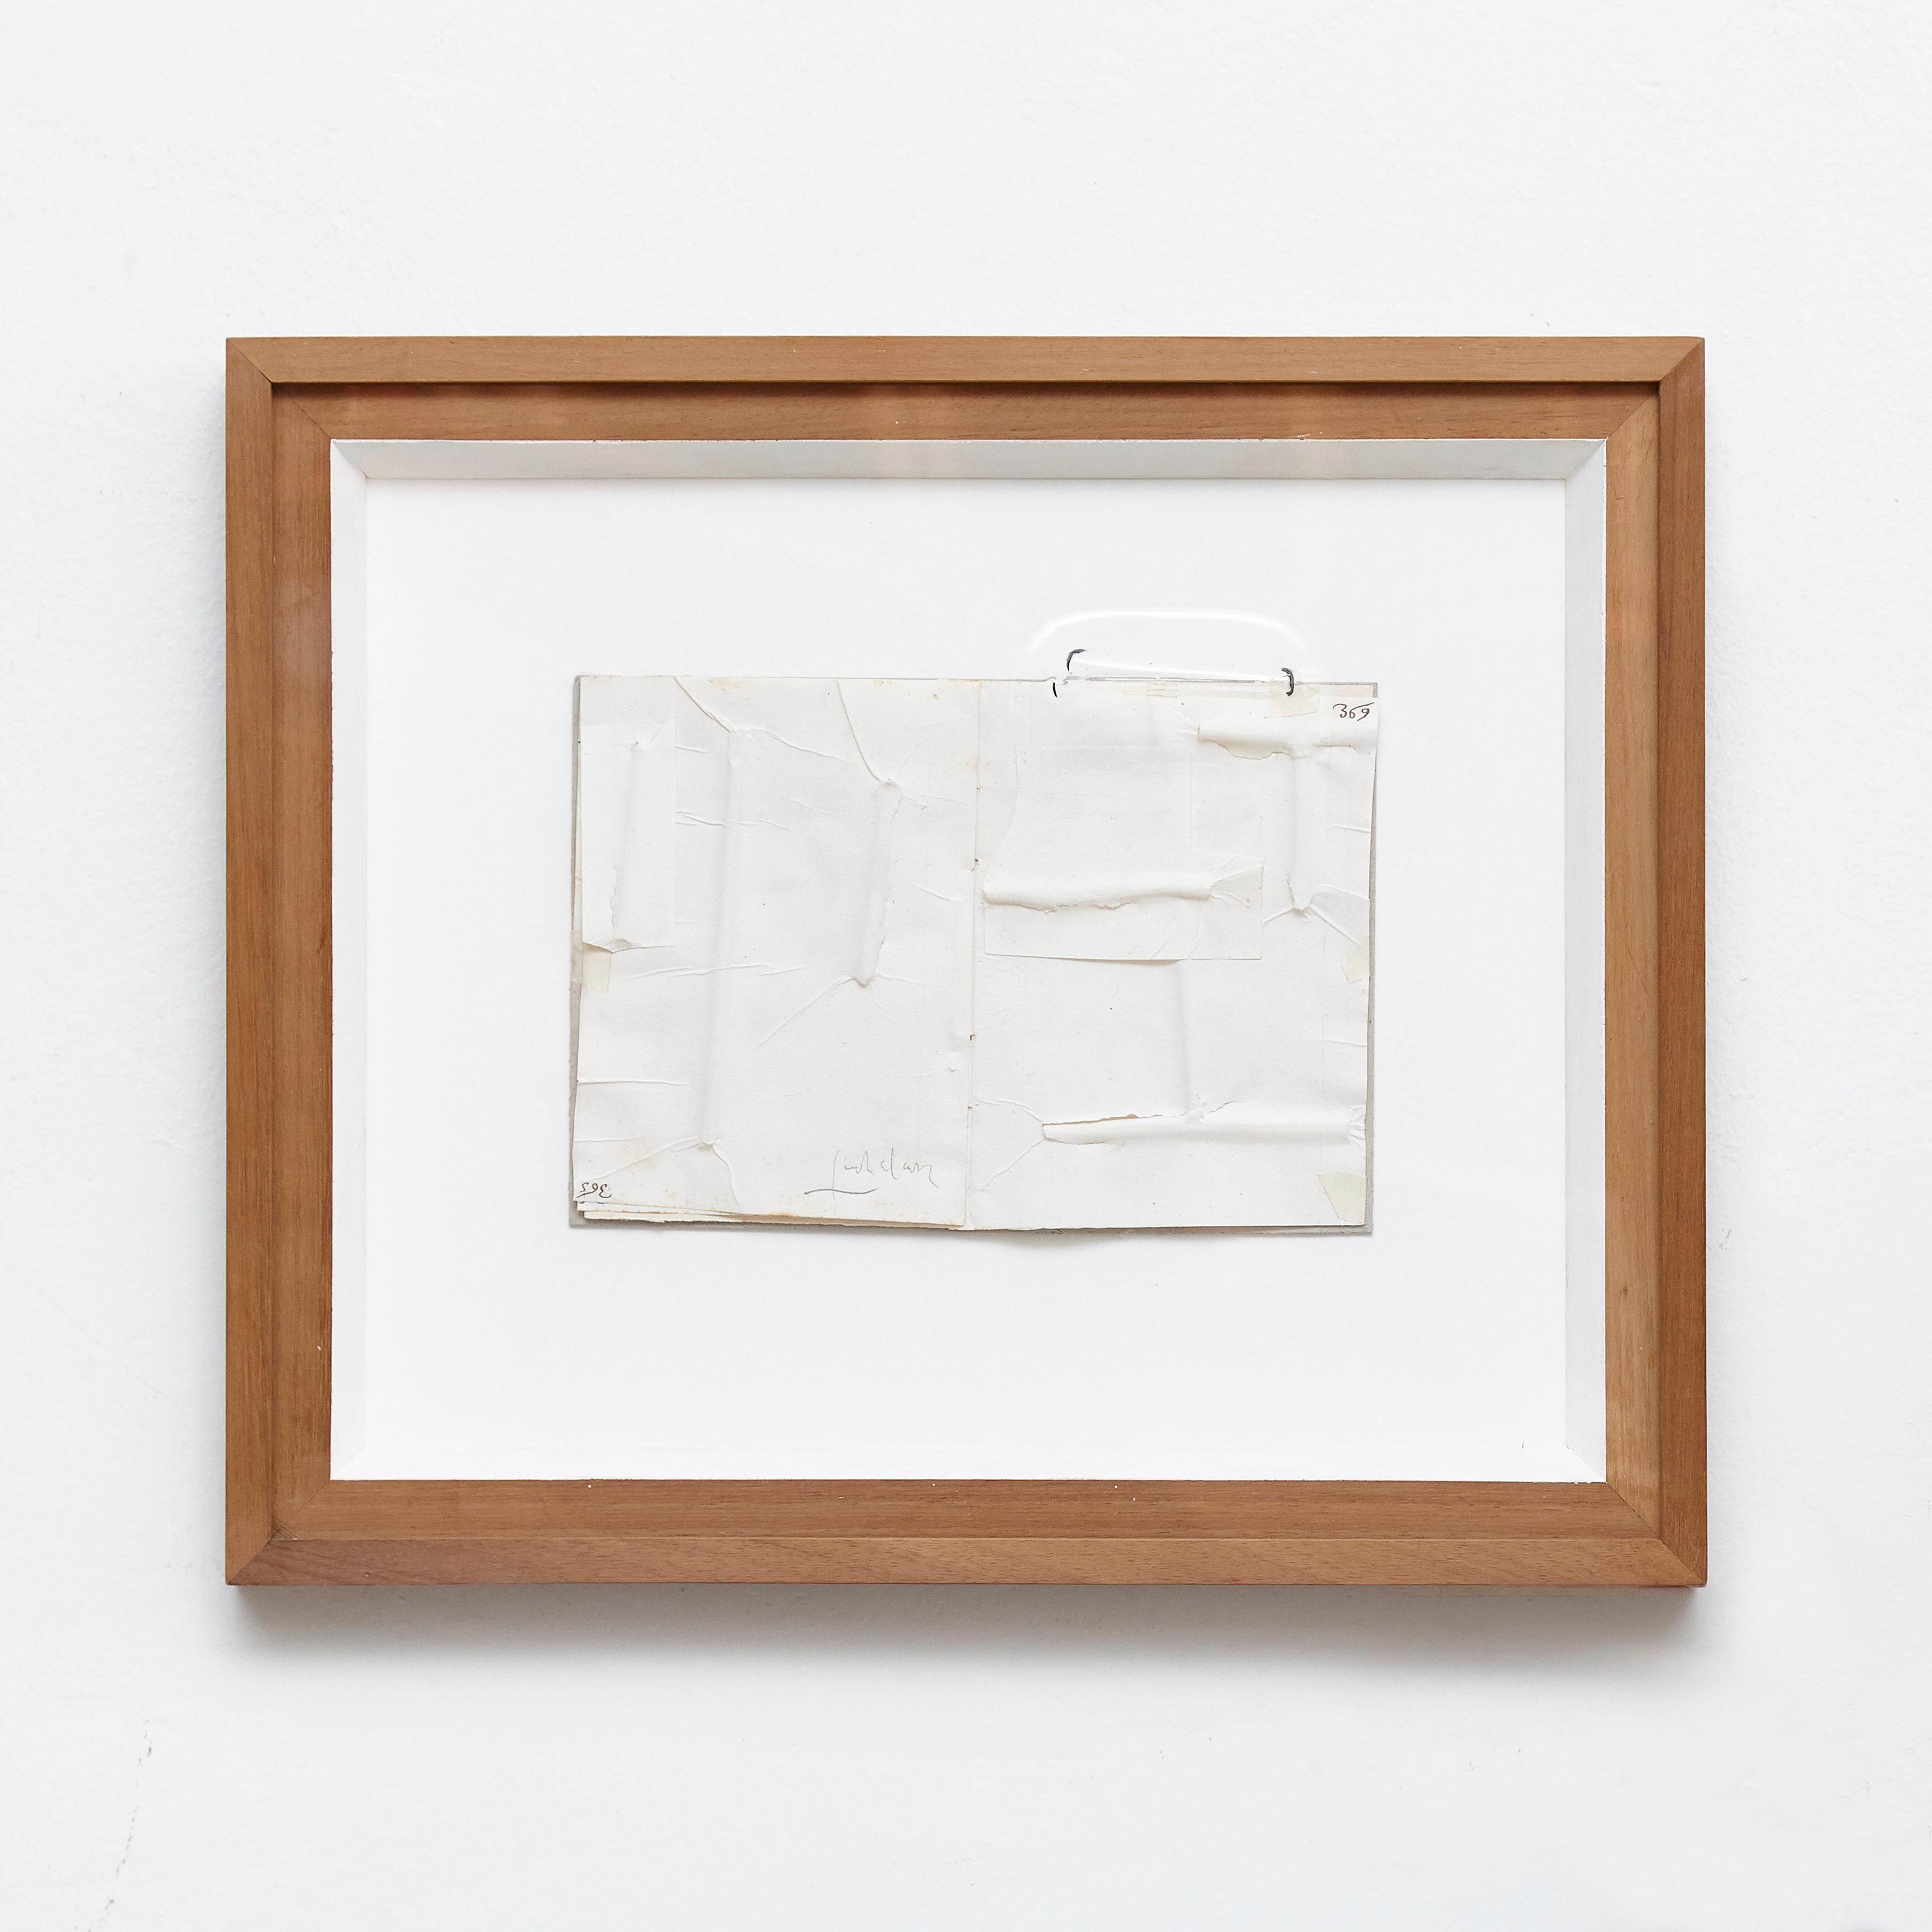 Spanish Jordi Alcaraz Contemporary Abstract Minimalist White Artwork, 2019